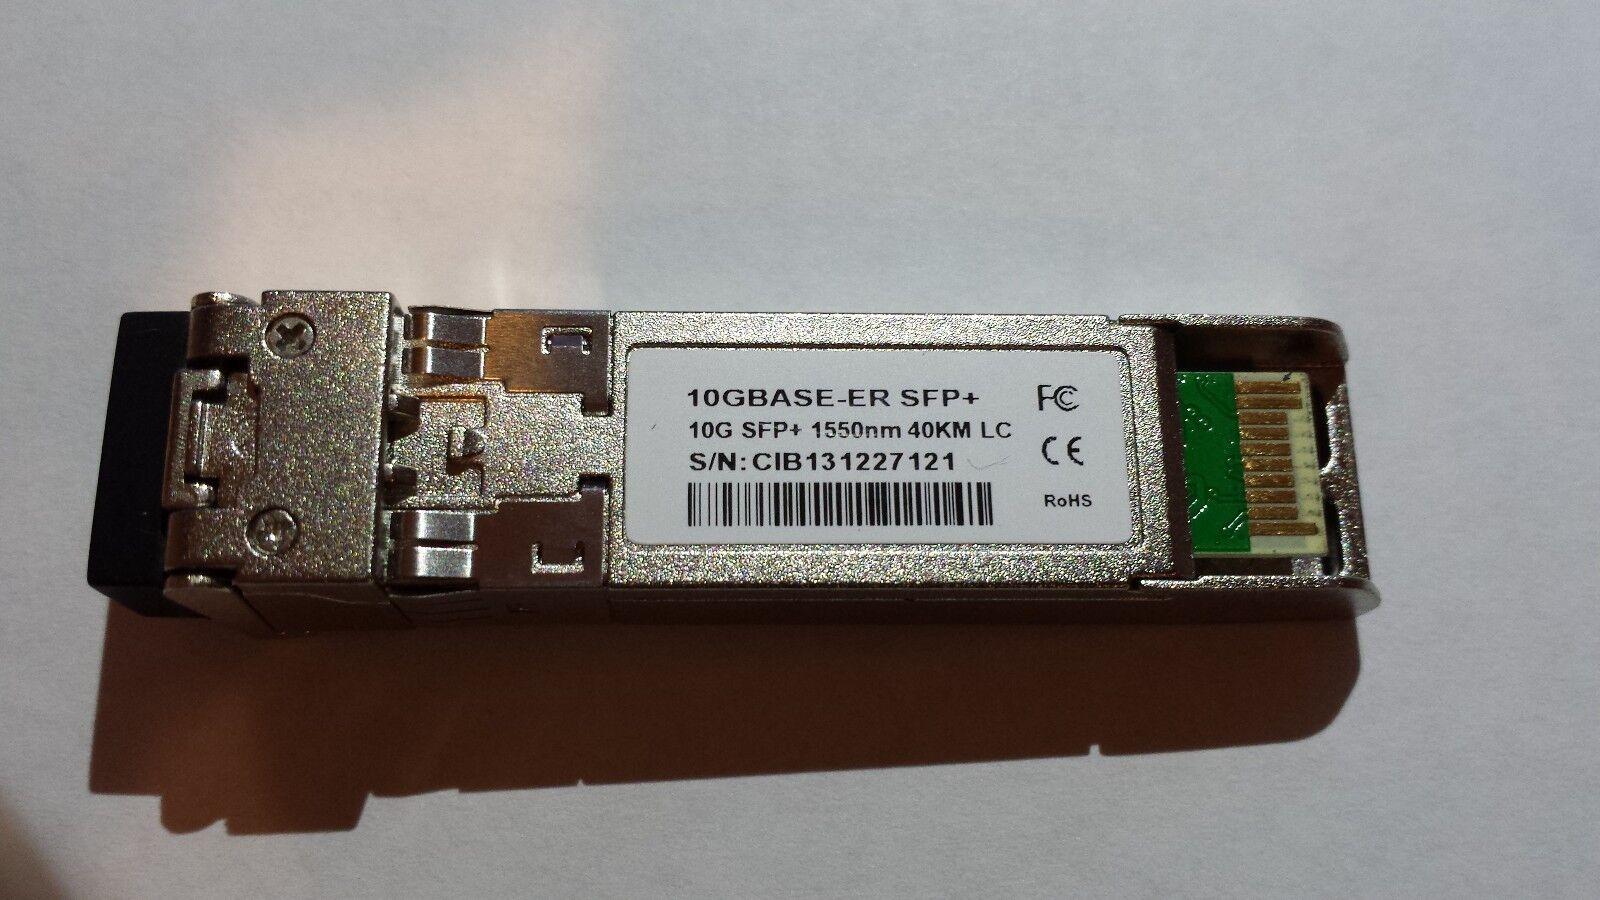 SFPP-10GE-ER - Juniper Compatible 10GBASE-ER SFP+ Module 1550nm 40km